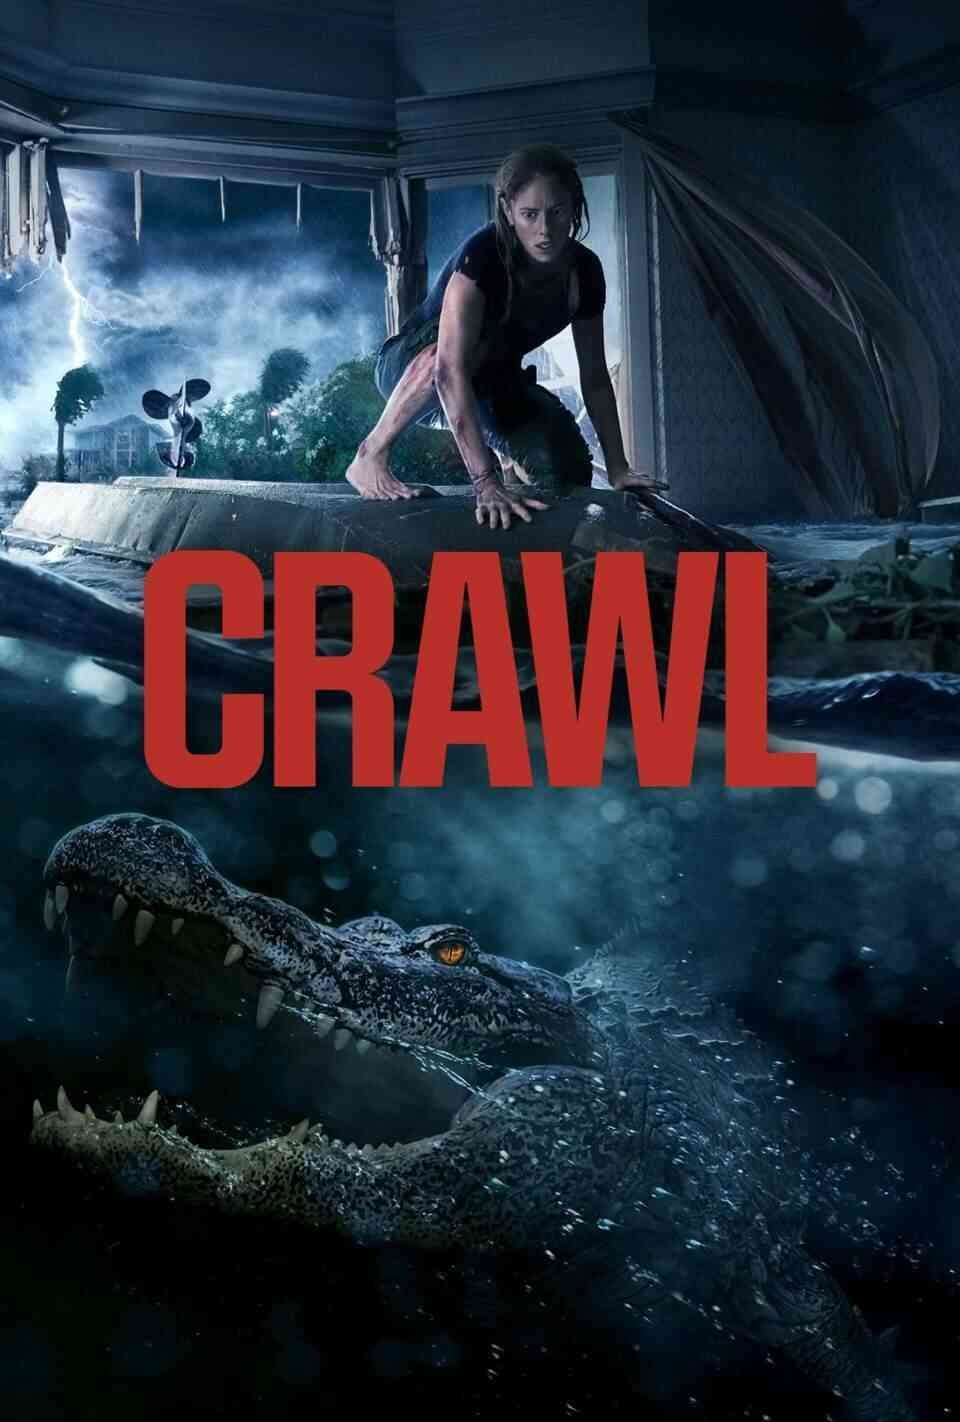 Read Crawl screenplay (poster)